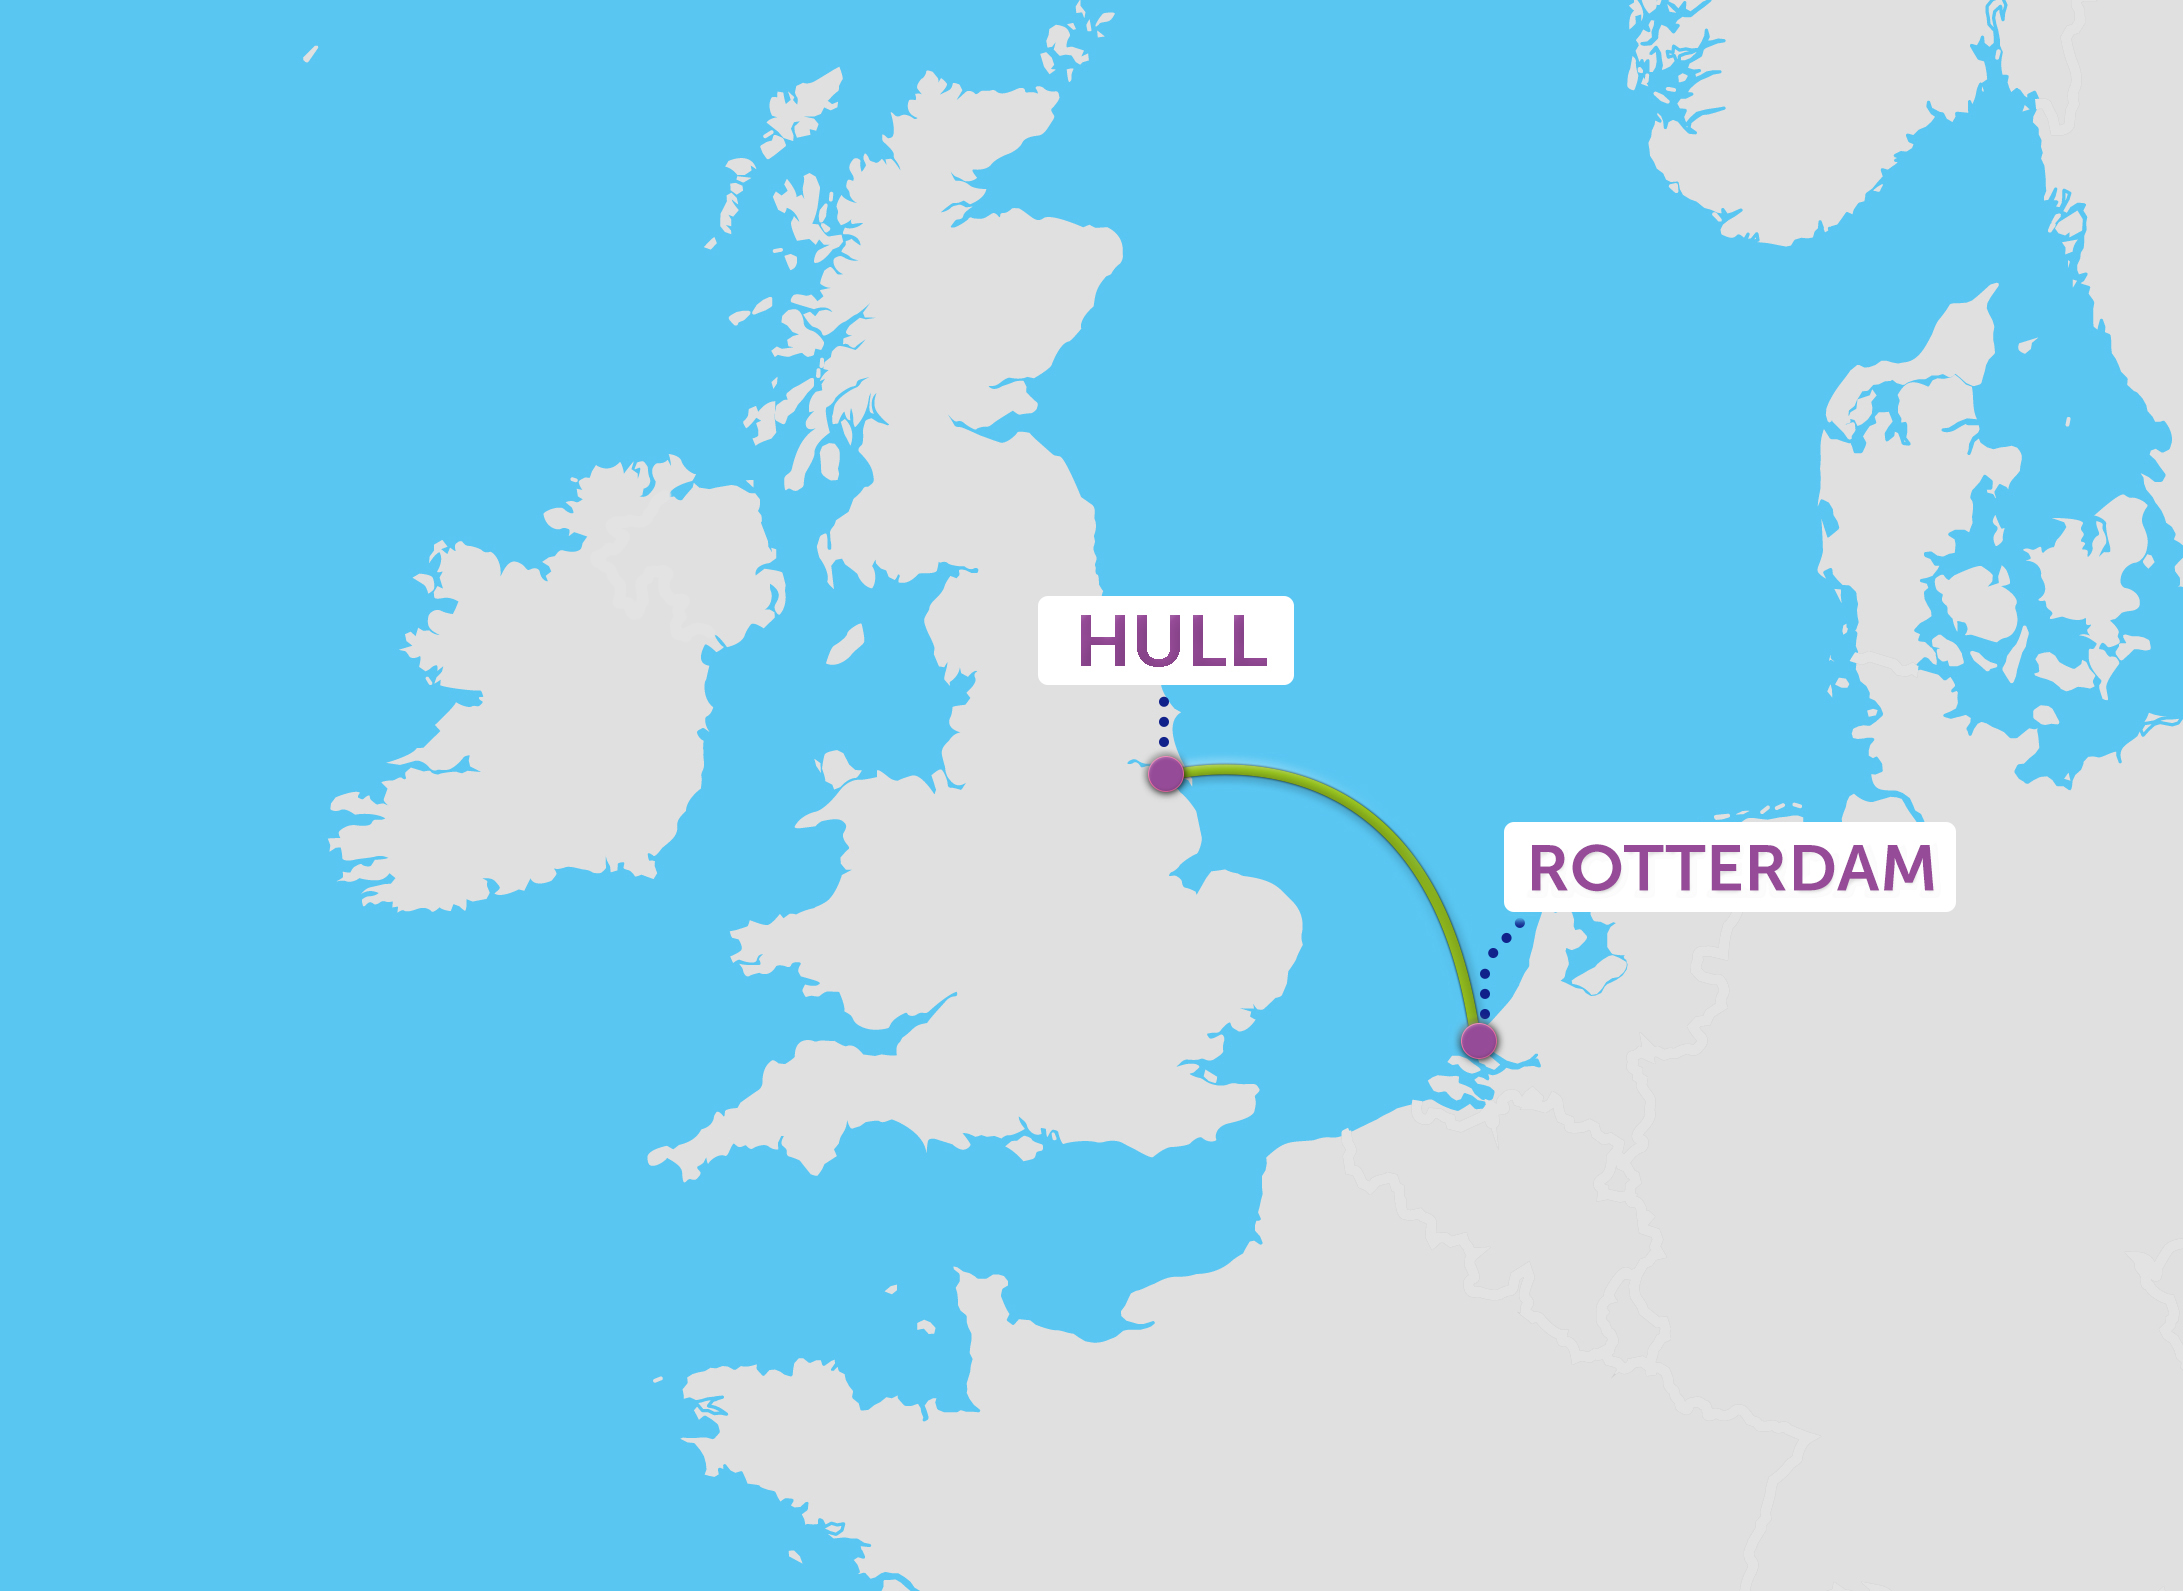 Veerboten tussen Rotterdam en Hull